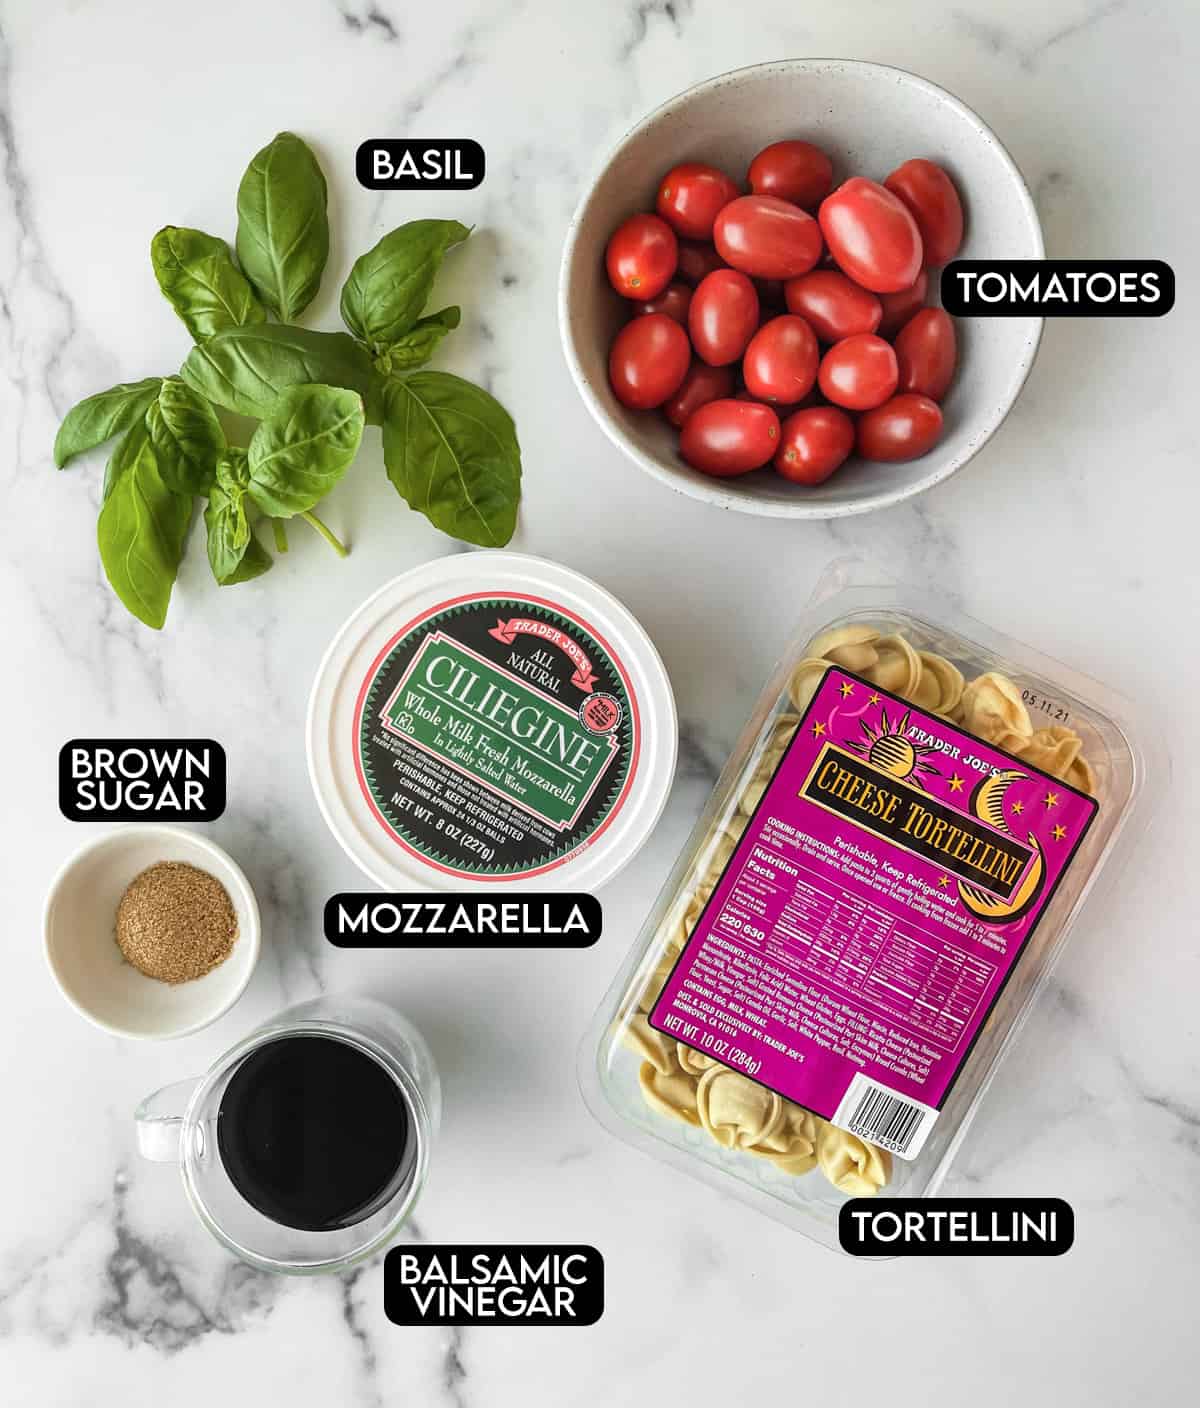 Labeled ingredients for tortellini caprese: basil, tomatoes, brown sugar, mozzarella, balsamic vinegar, and tortellini.